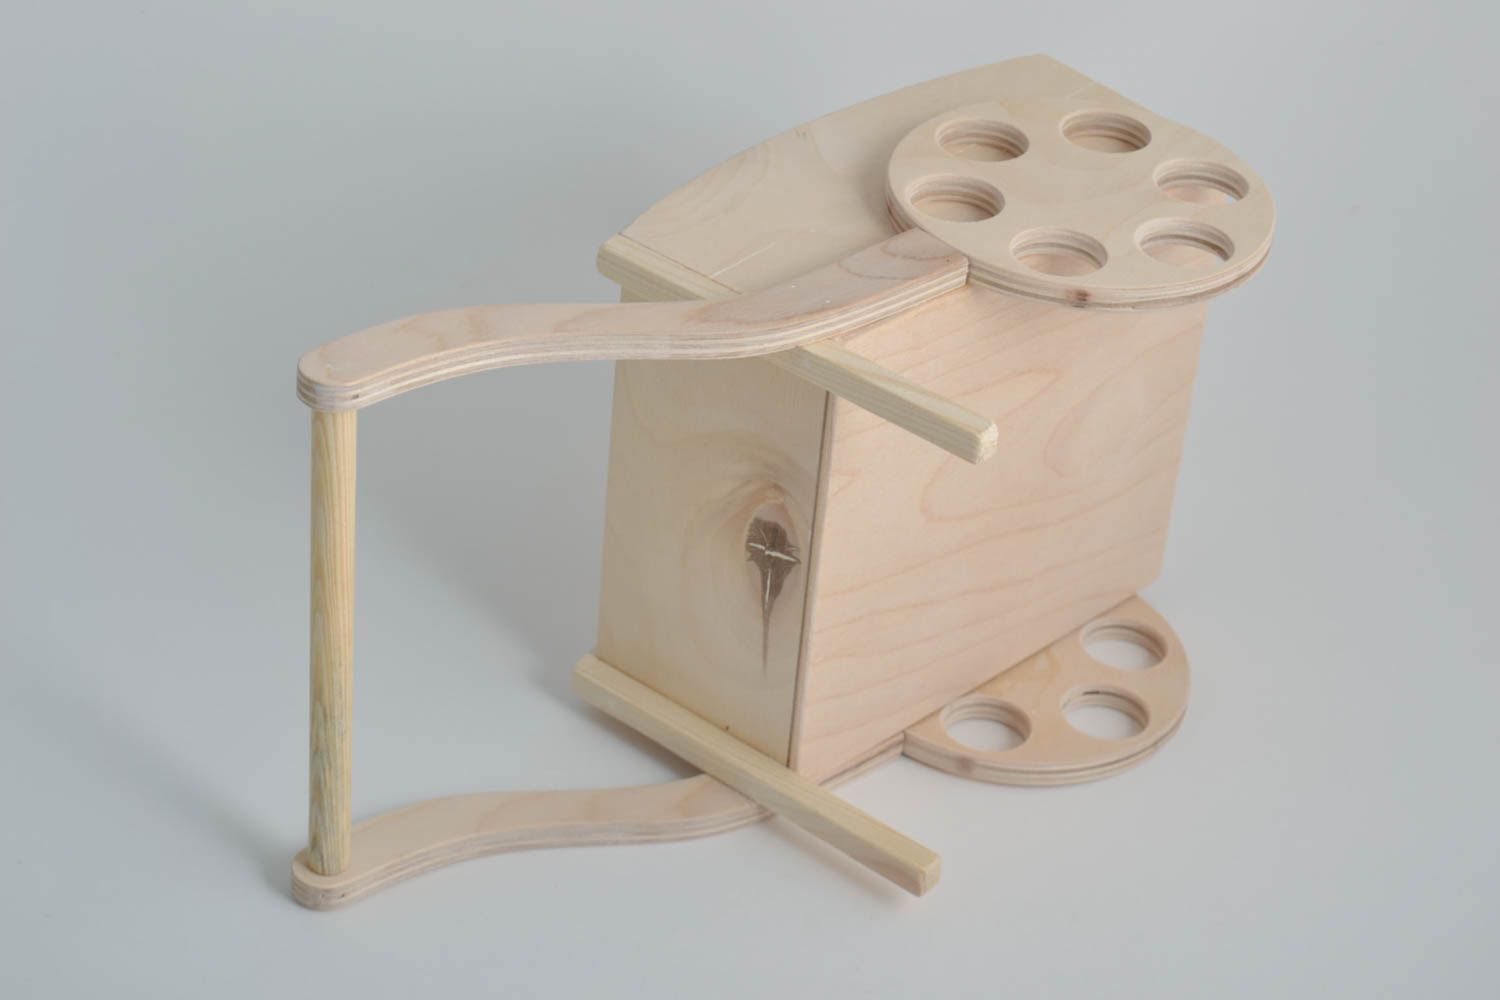 Unusual handmade plywood blank cachepot art materials art and craft supplies photo 4